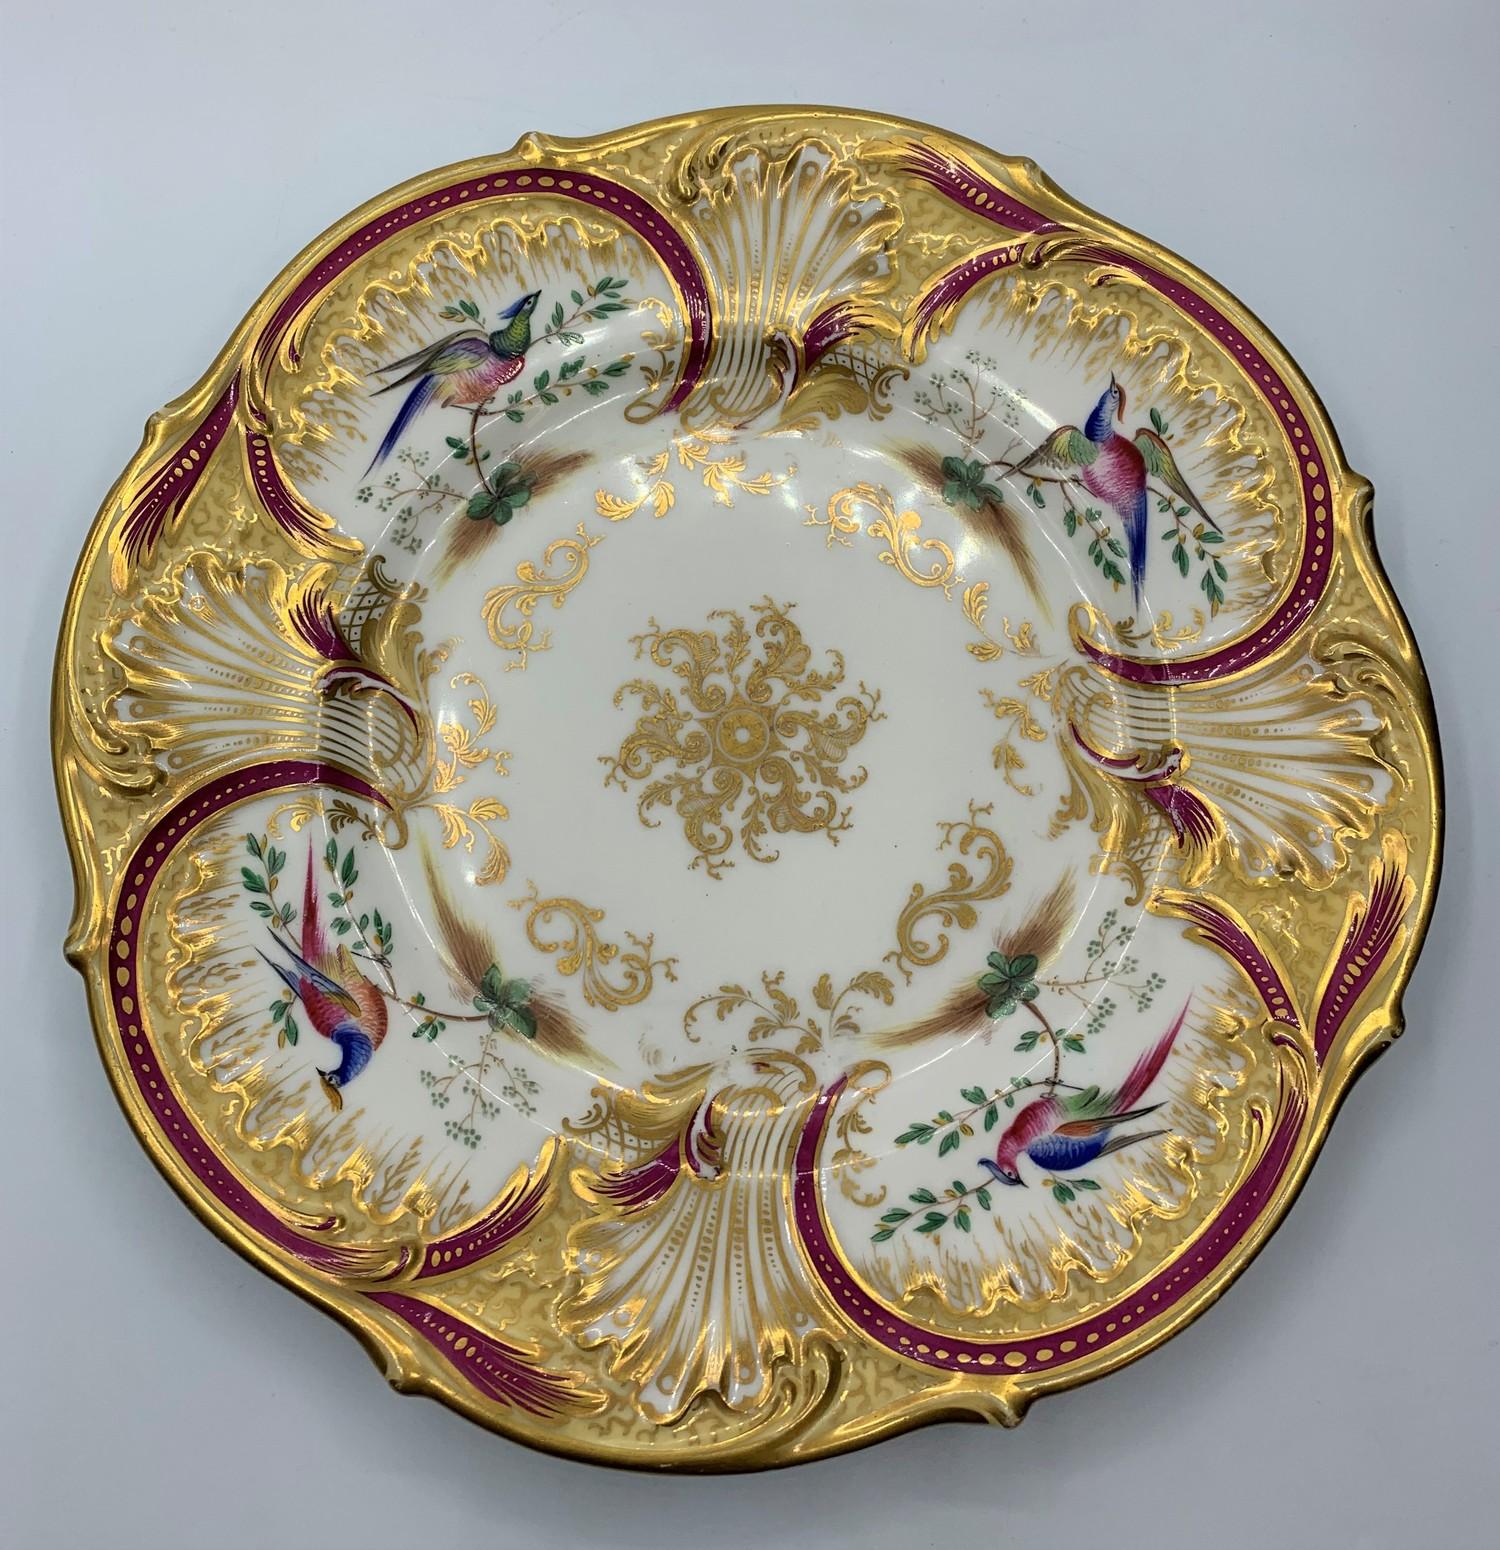 H&R Daniel 'Savoy plate' circa 1840, pattern no 8751 in good condition, no restoration, 24cm - Image 2 of 4